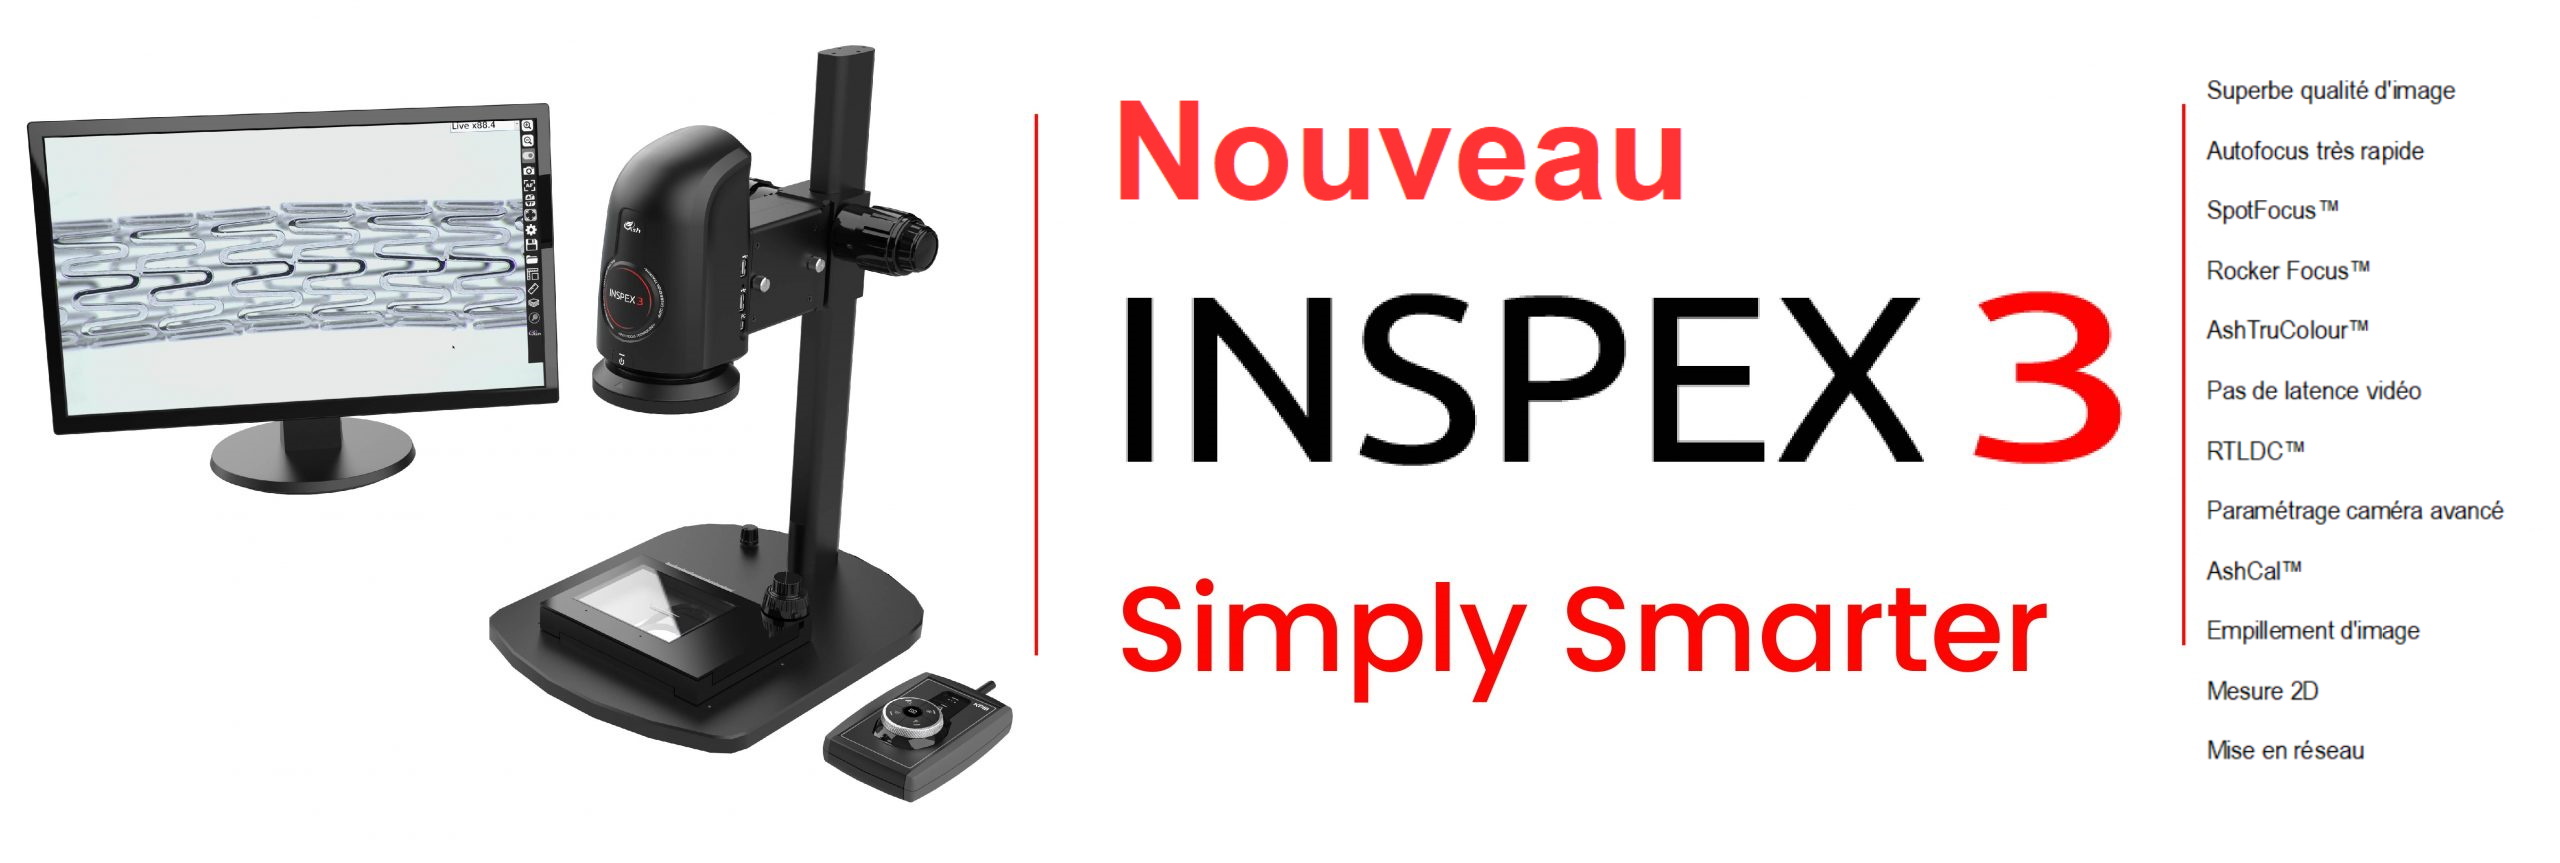 INSPEX II - SIMPLY POWERFUL